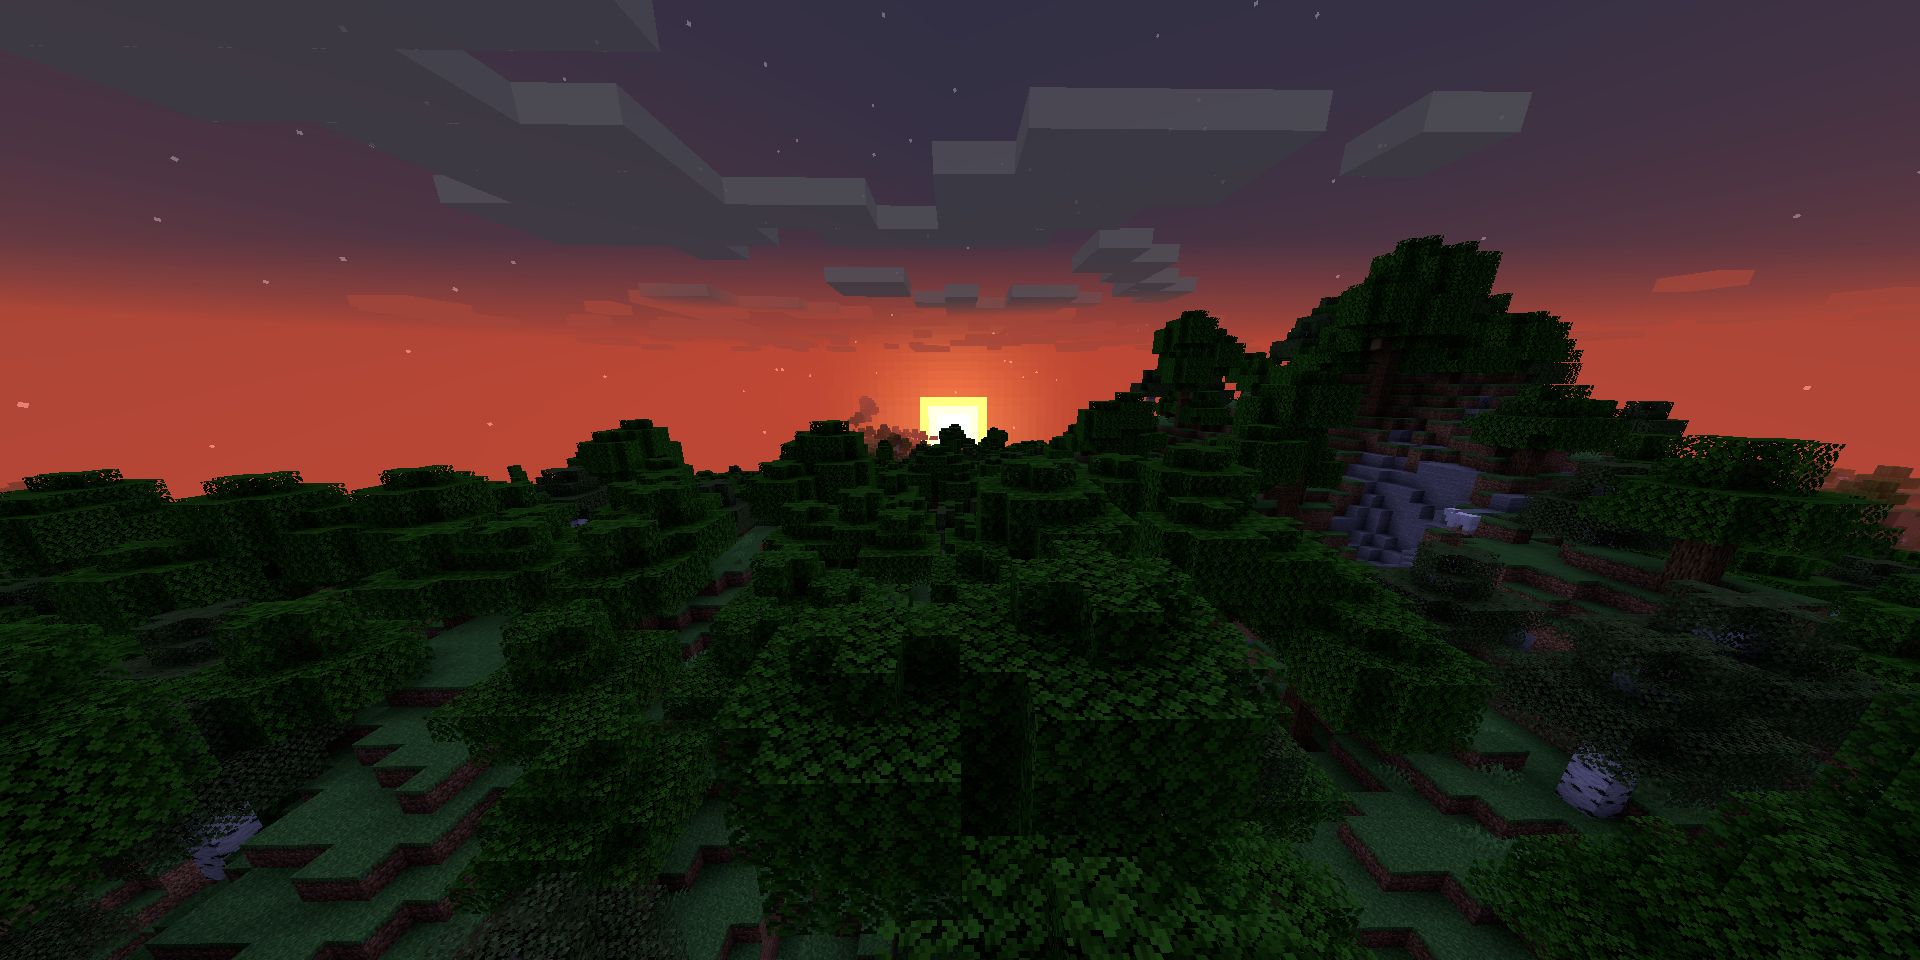 The sunrise in Minecraft